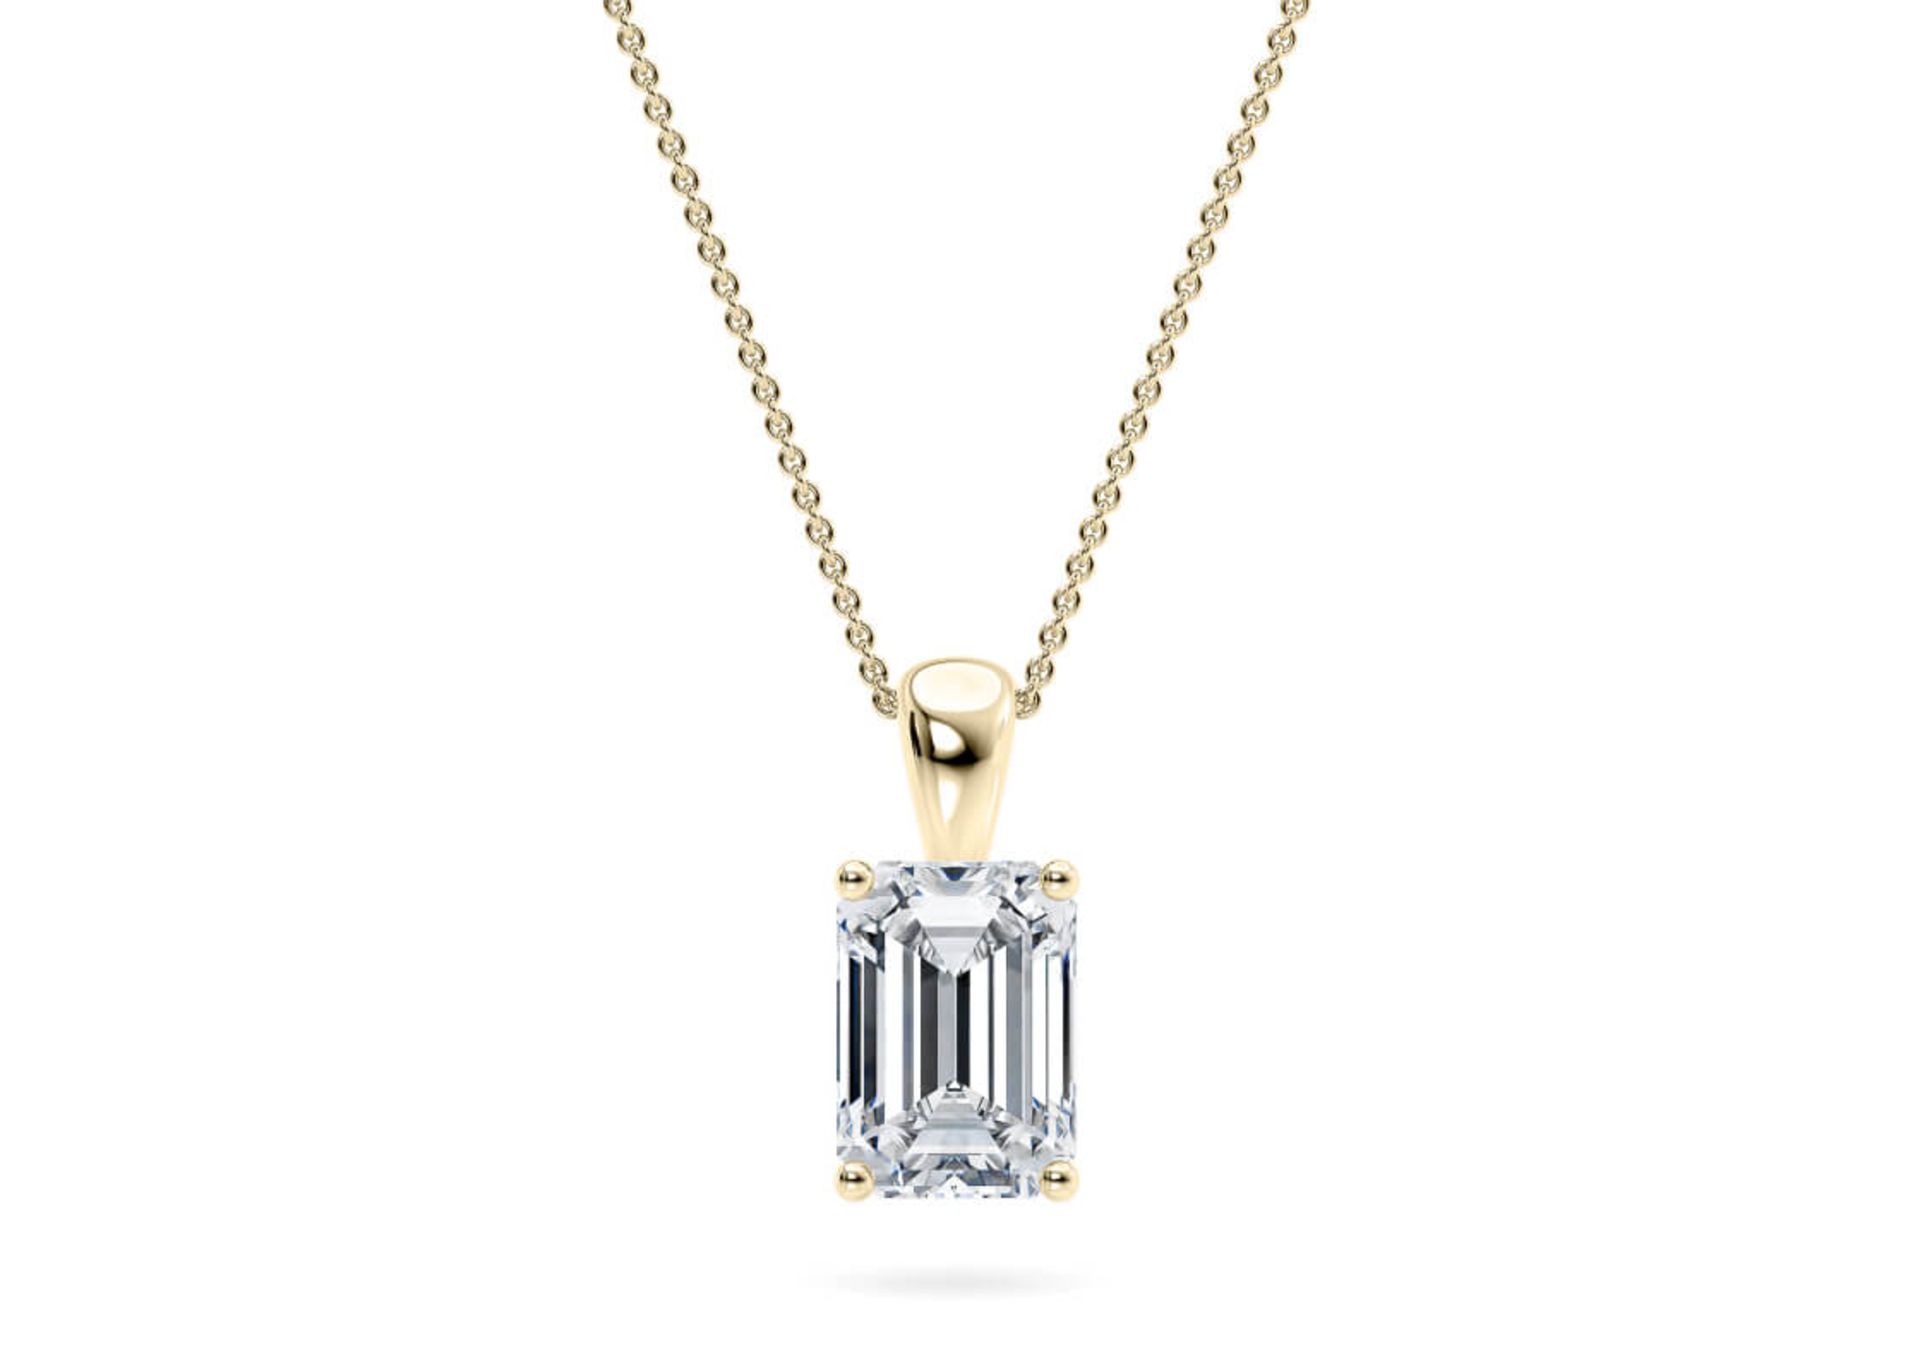 ** ON SALE ** Emerald Cut Diamond 3.00 Carat F Colour VS2 Clarity - Necklace Pendant - 18kt Yellow